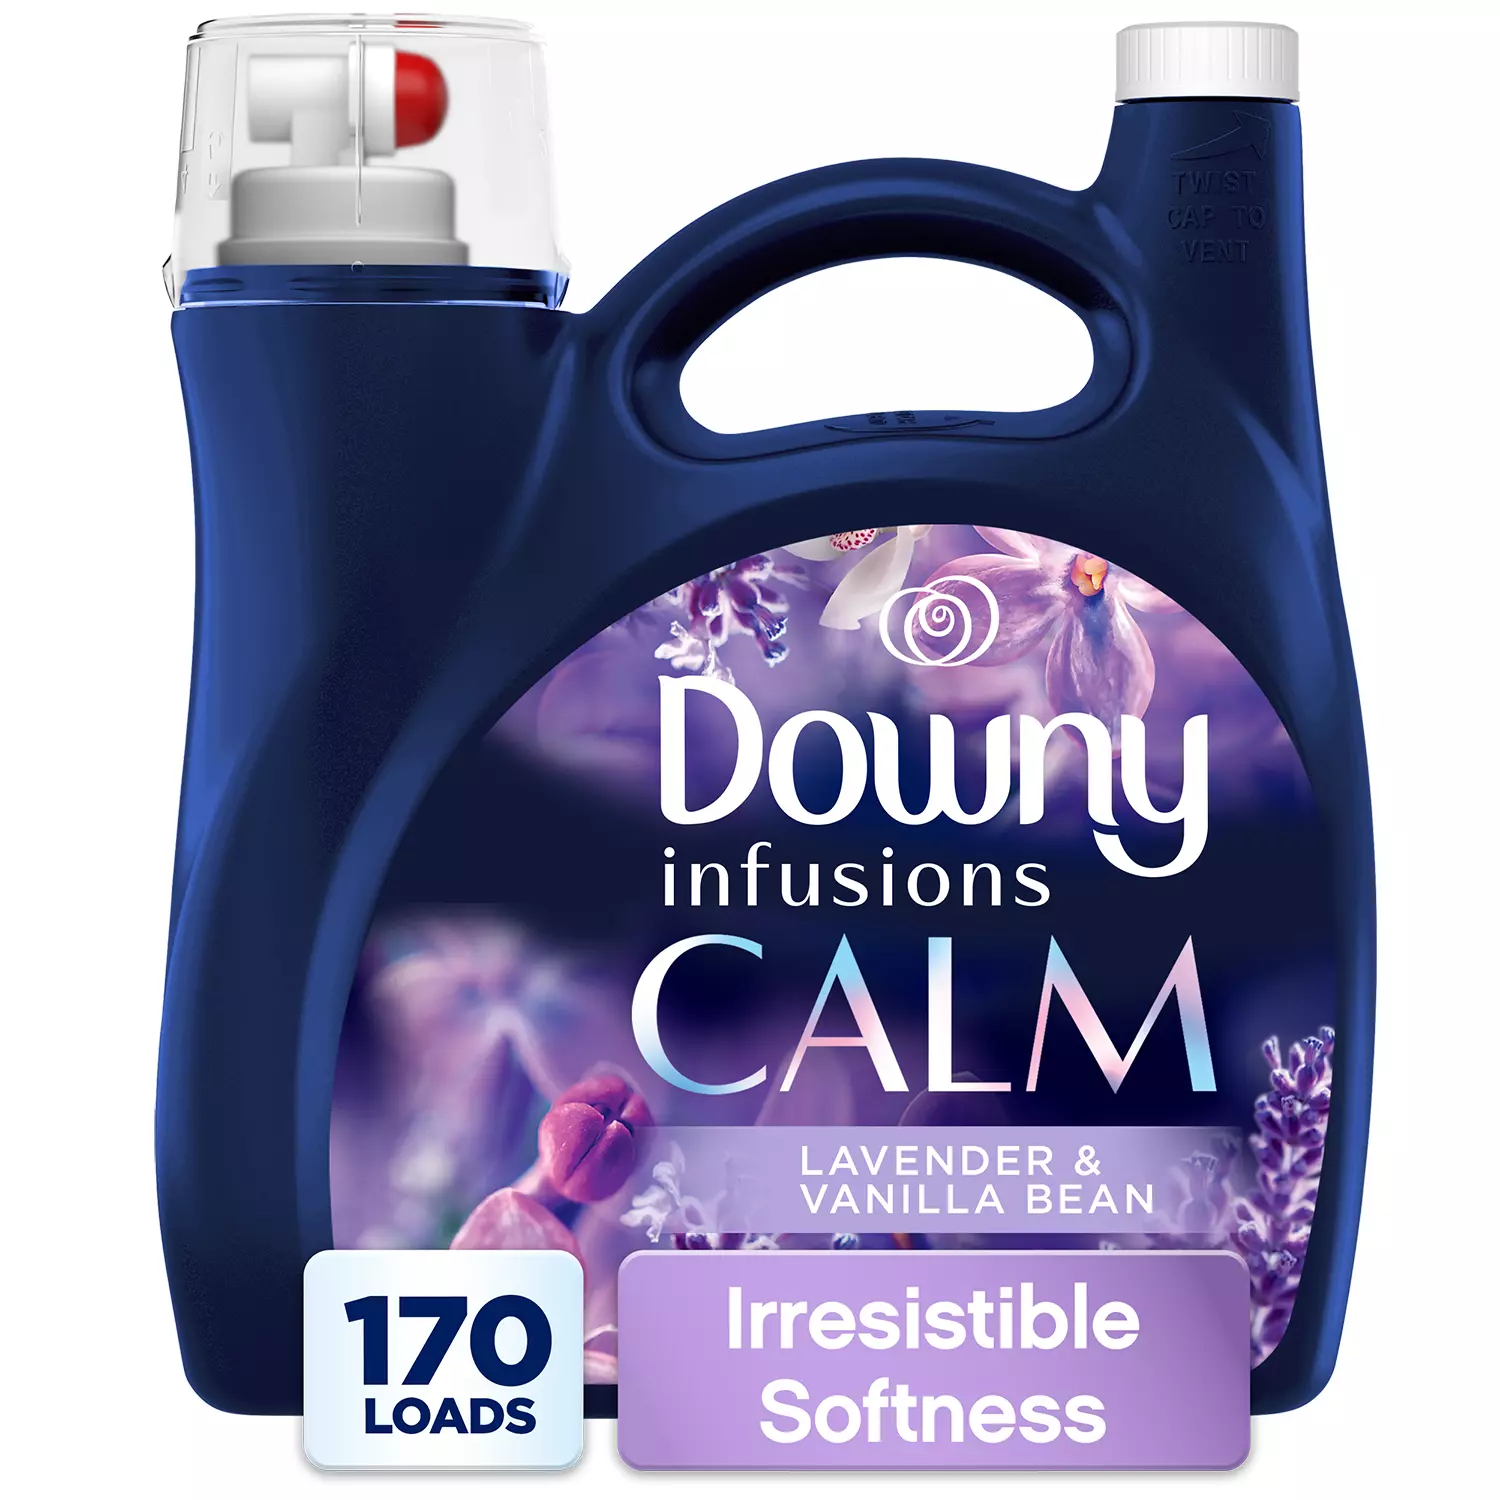 Downy Ultra Infusions Liquid Fabric Conditioner, Calm, 170 loads (115 fl. oz.)